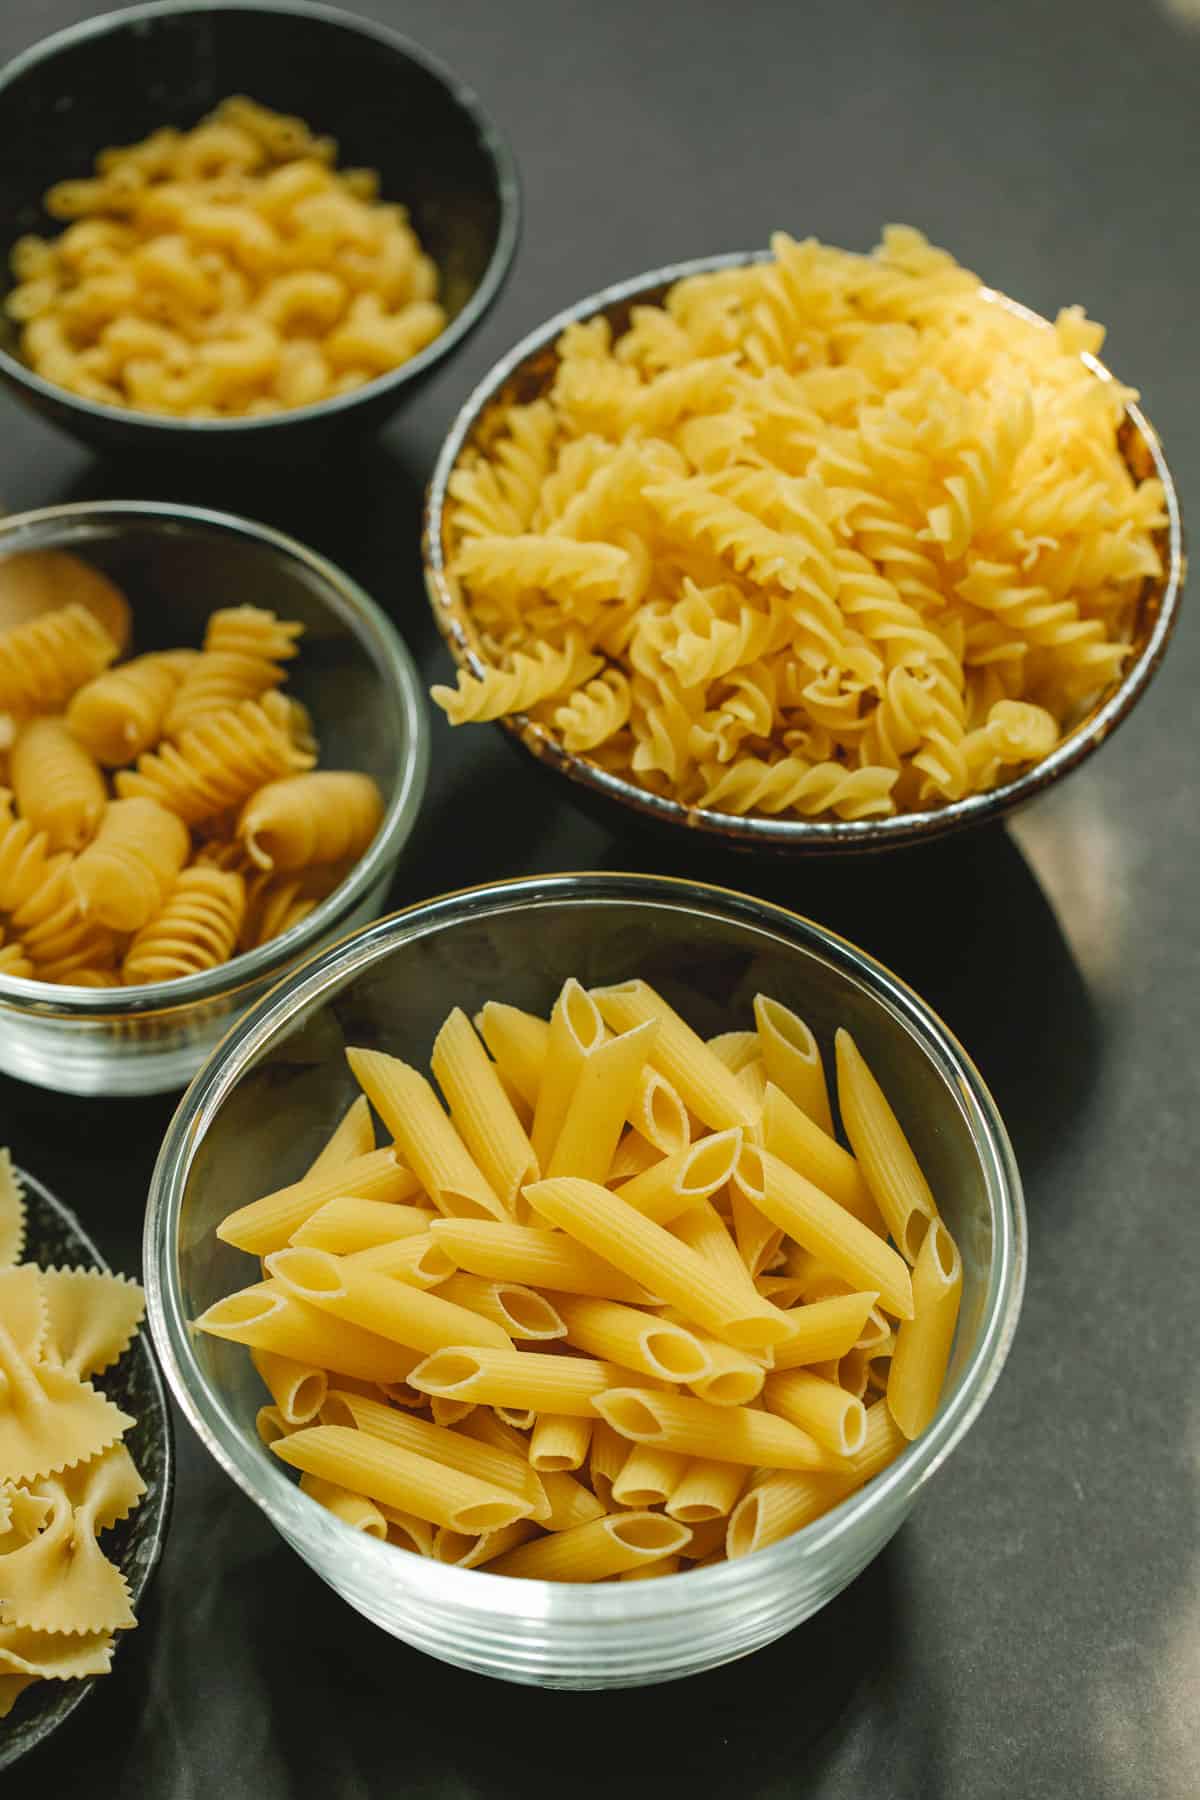 4 varieties of pasta shapes in individual bowls.